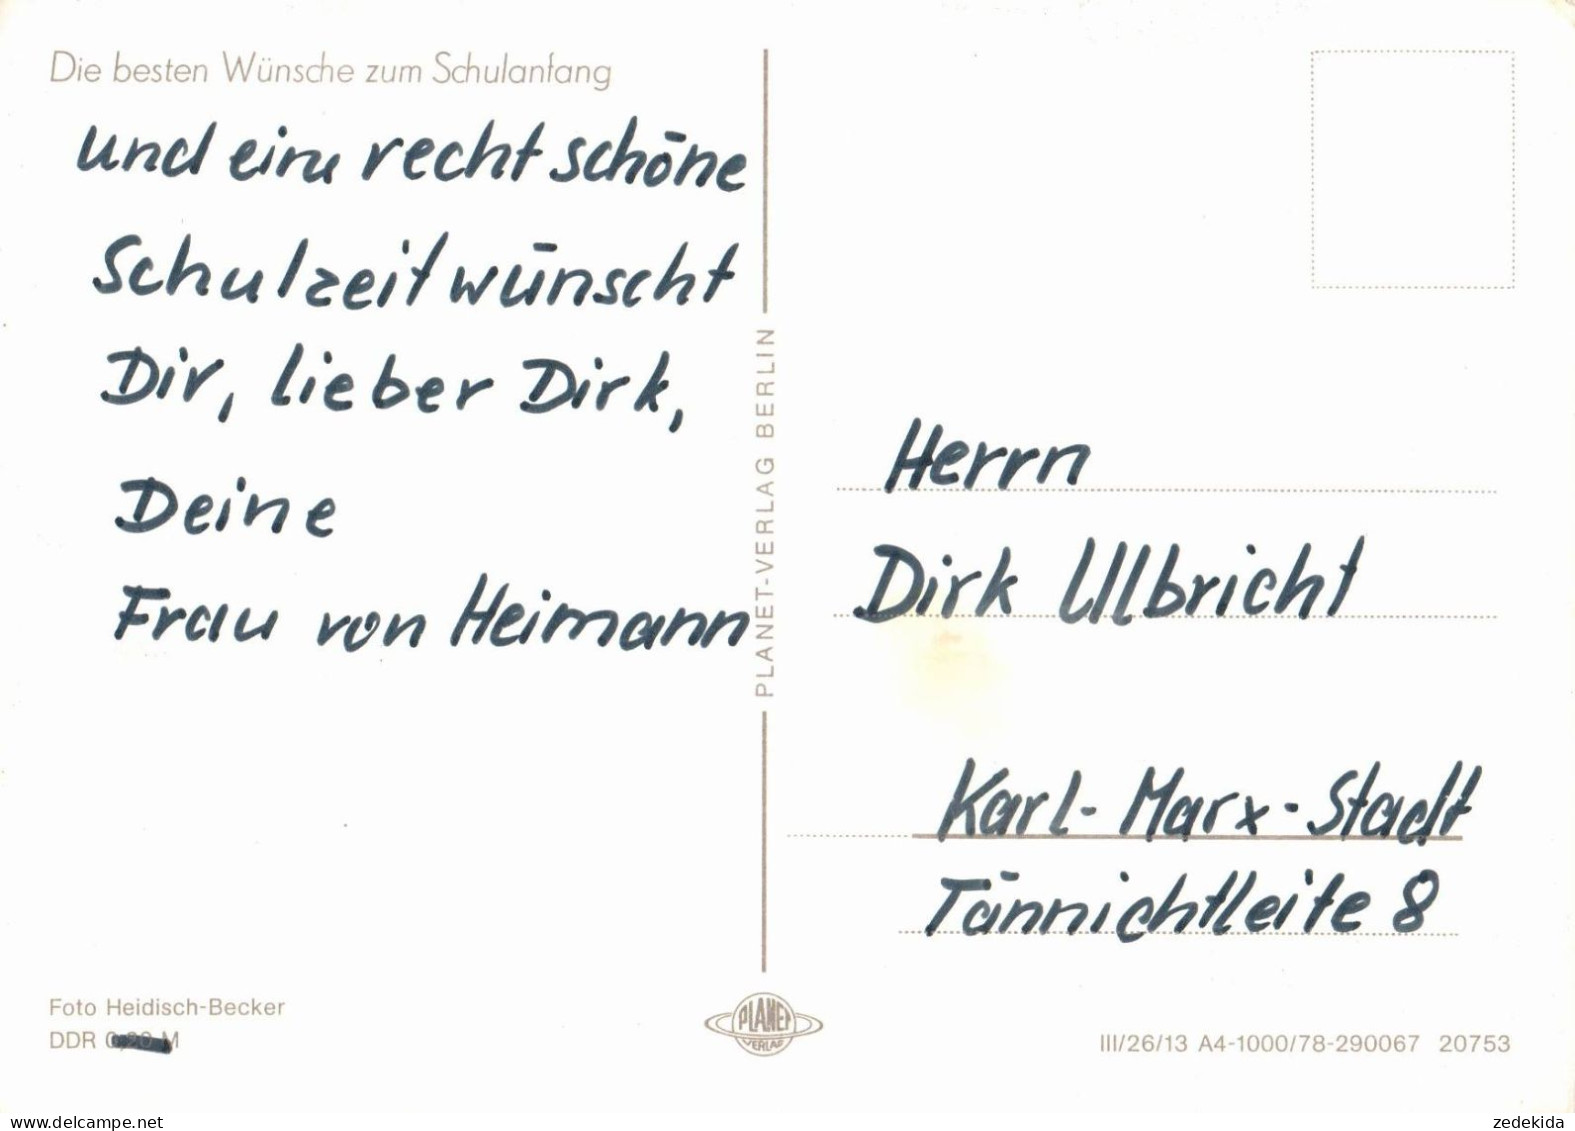 G6327 - Glückwunschkarte Schulanfang - Zuckertüte - Verlag Planet DDR - Premier Jour D'école